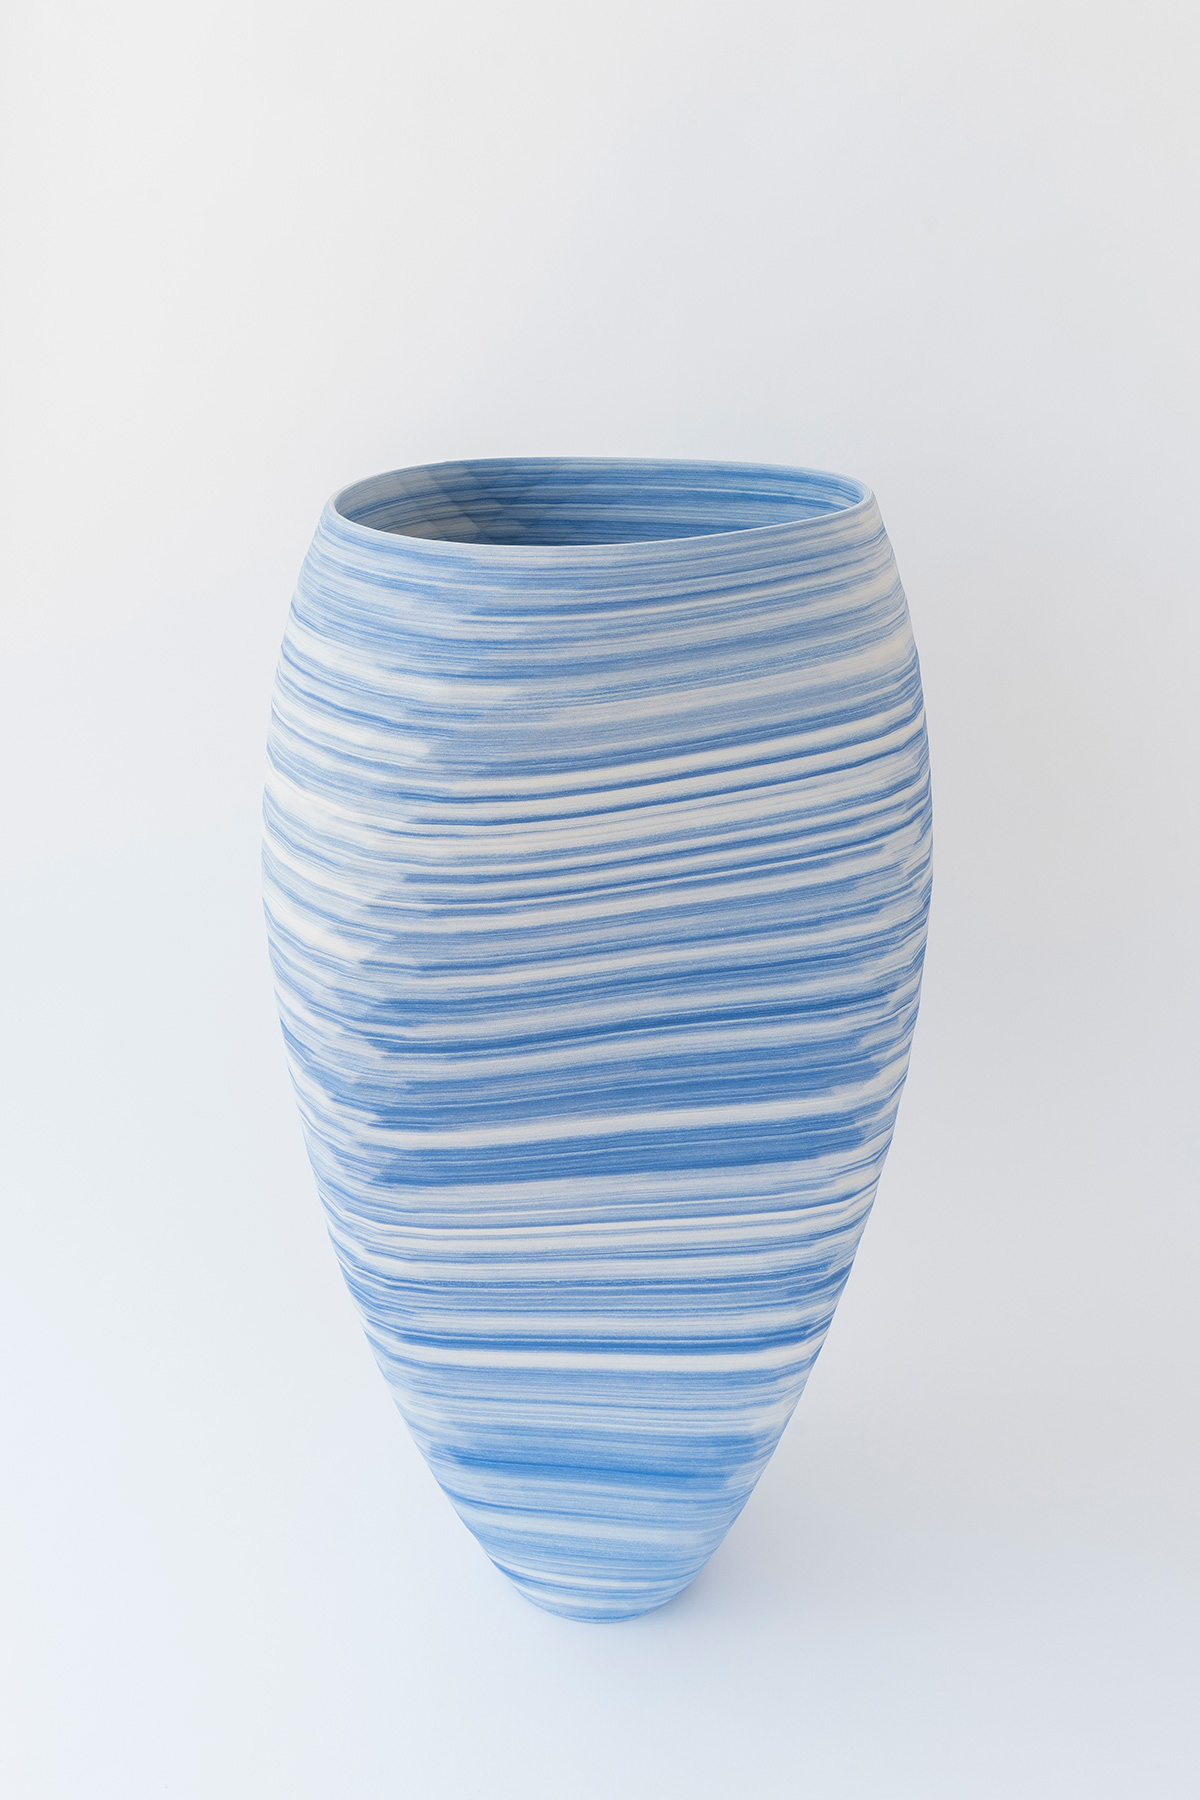 3D printed Blue and white porcelain vase